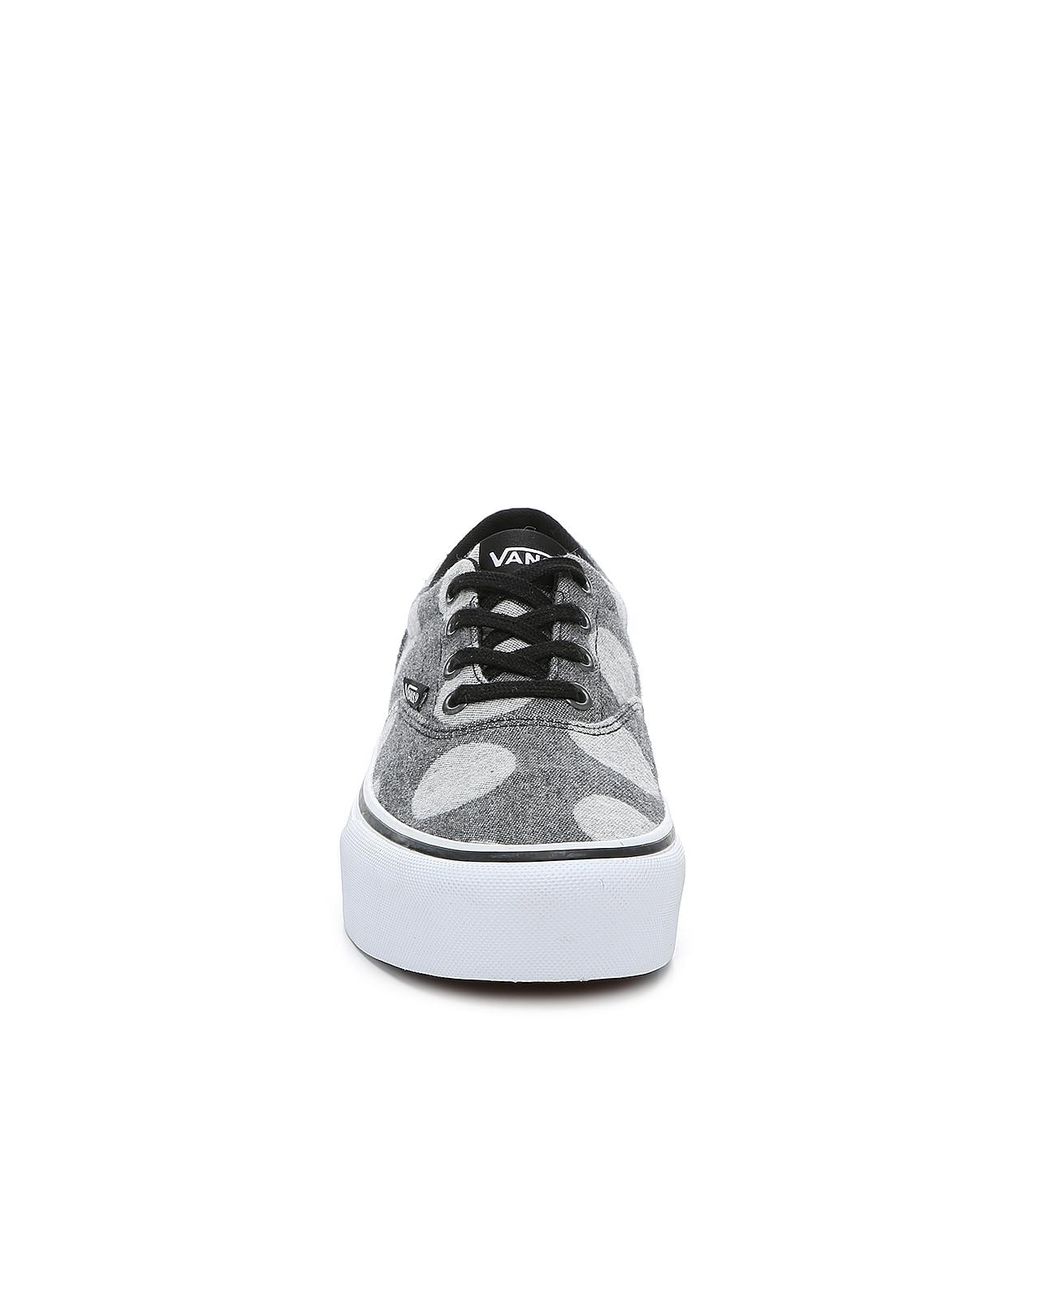 Vans Doheny Platform Sneaker in Gray | Lyst